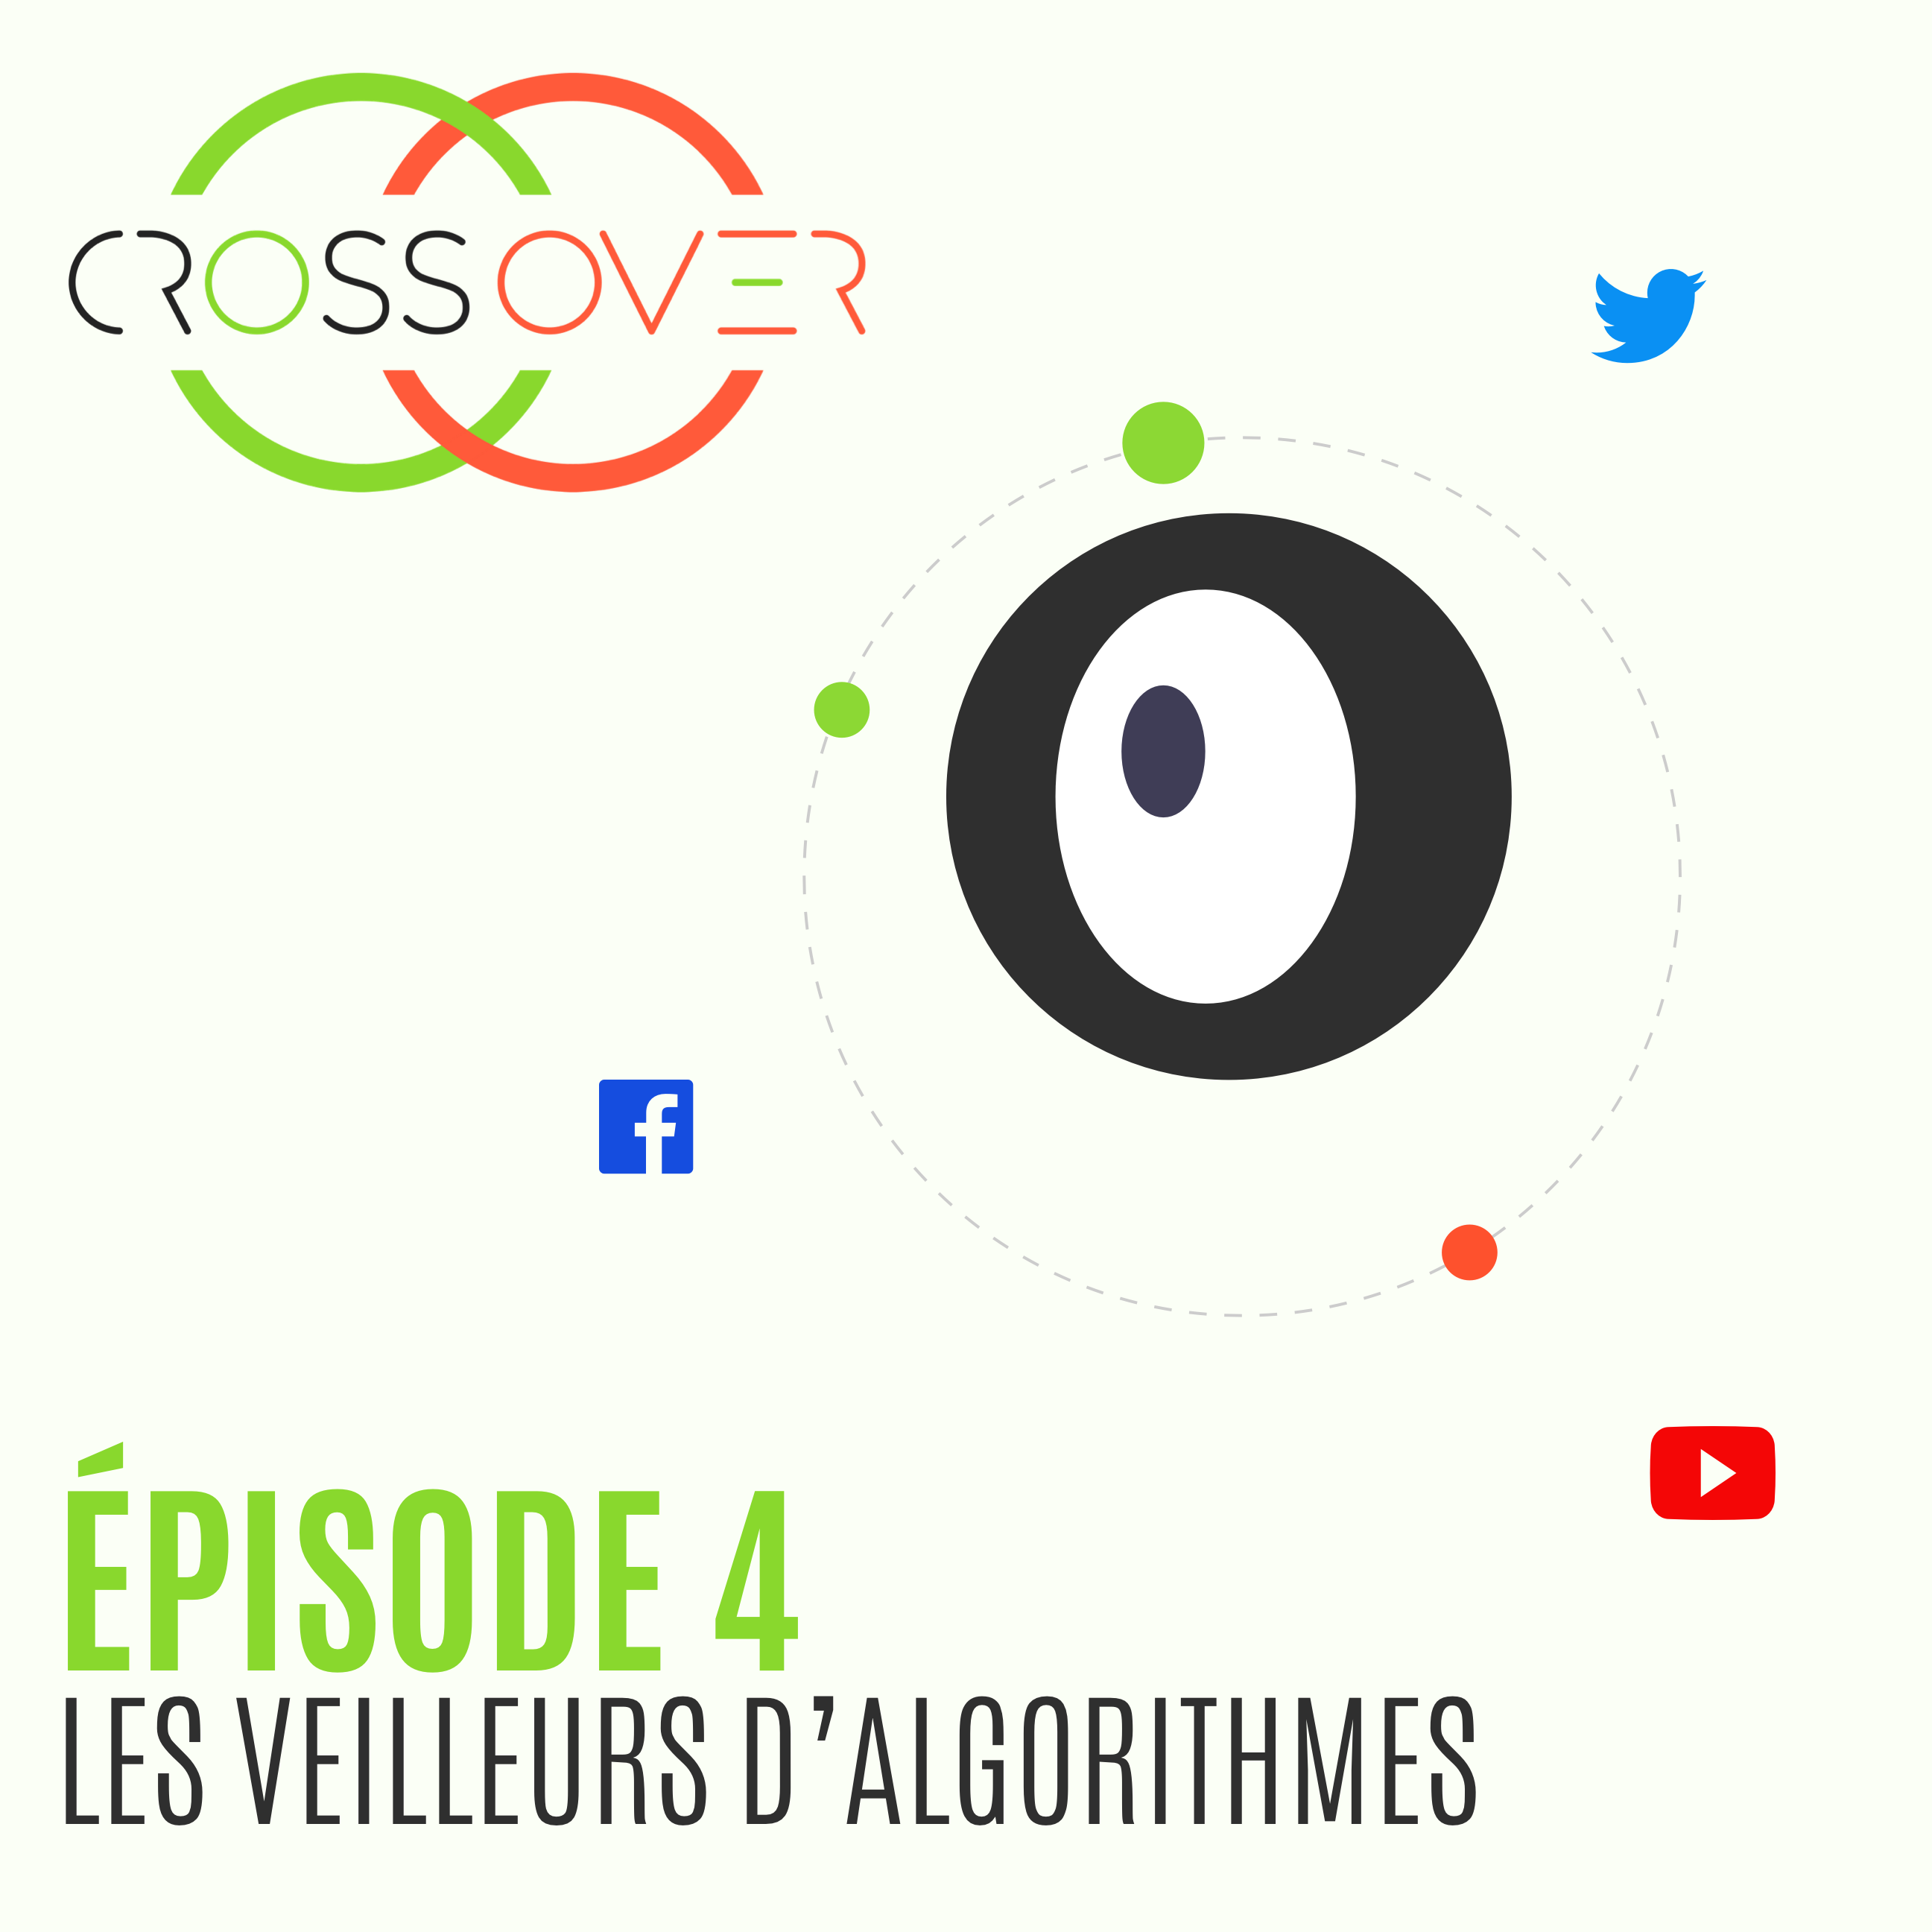 CrossOver podcast – episode 4 “Algorithm watchers”